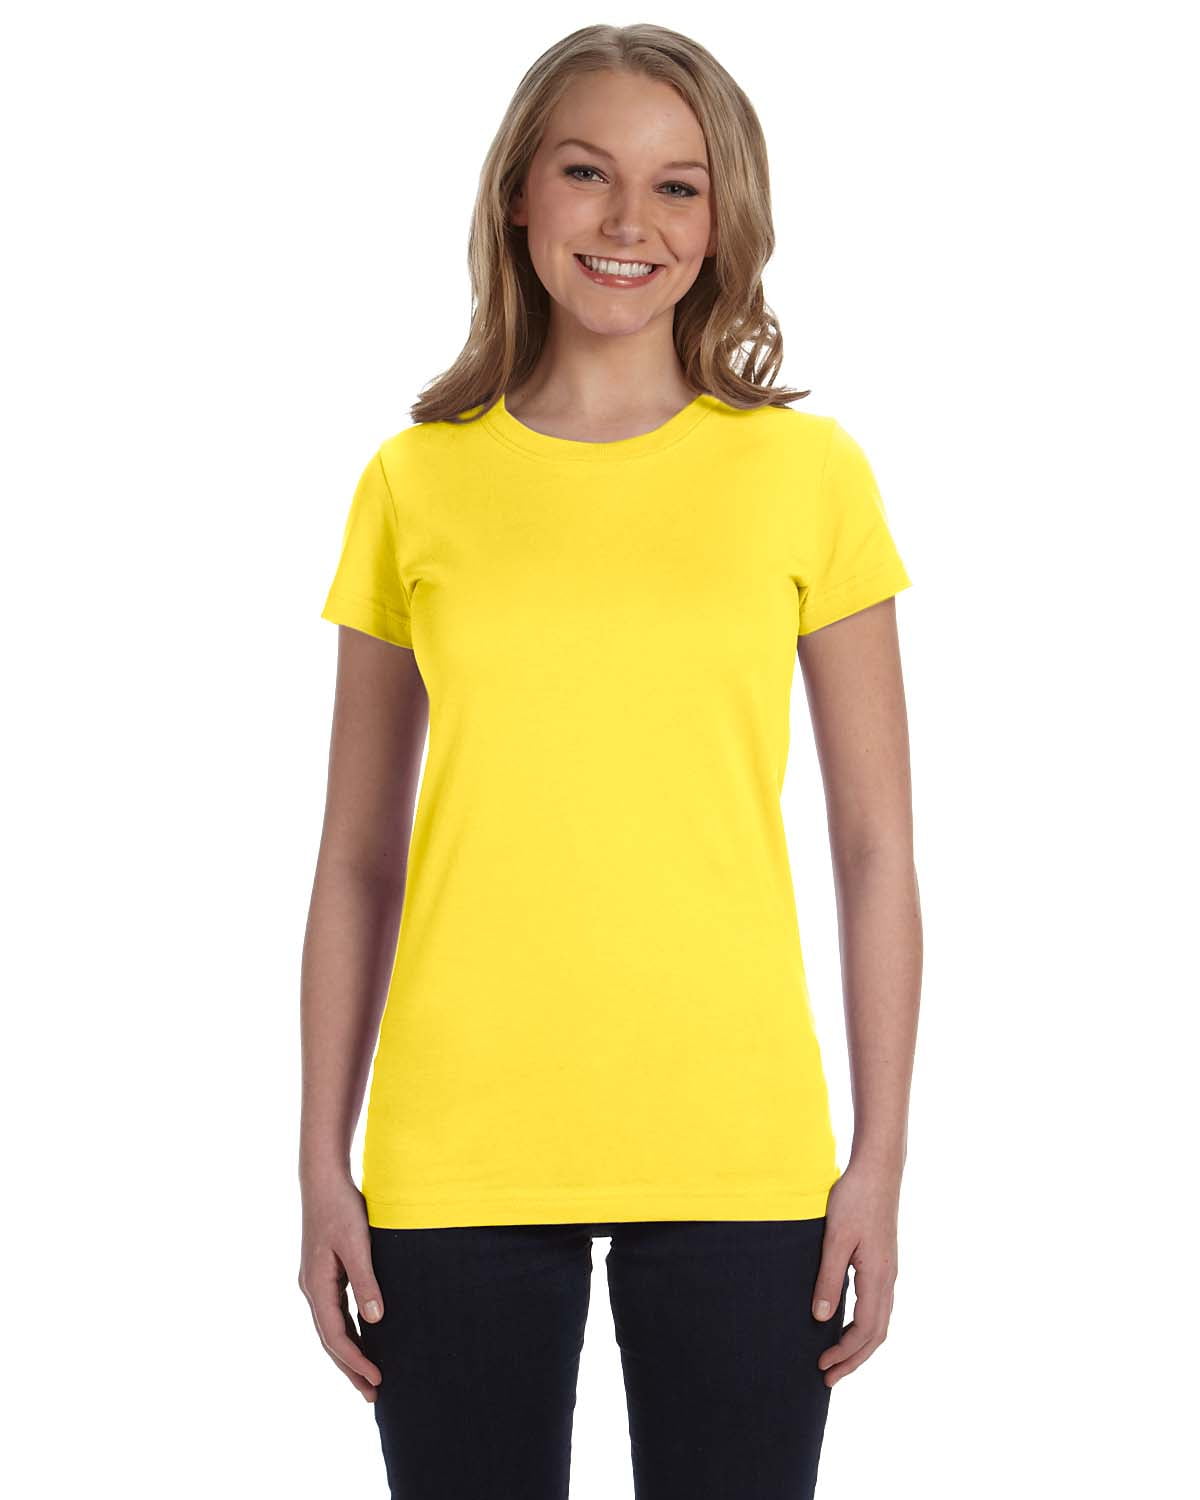 LAT Apparel - Ladies' Junior Fit T-Shirt - YELLOW - S - Walmart.com ...